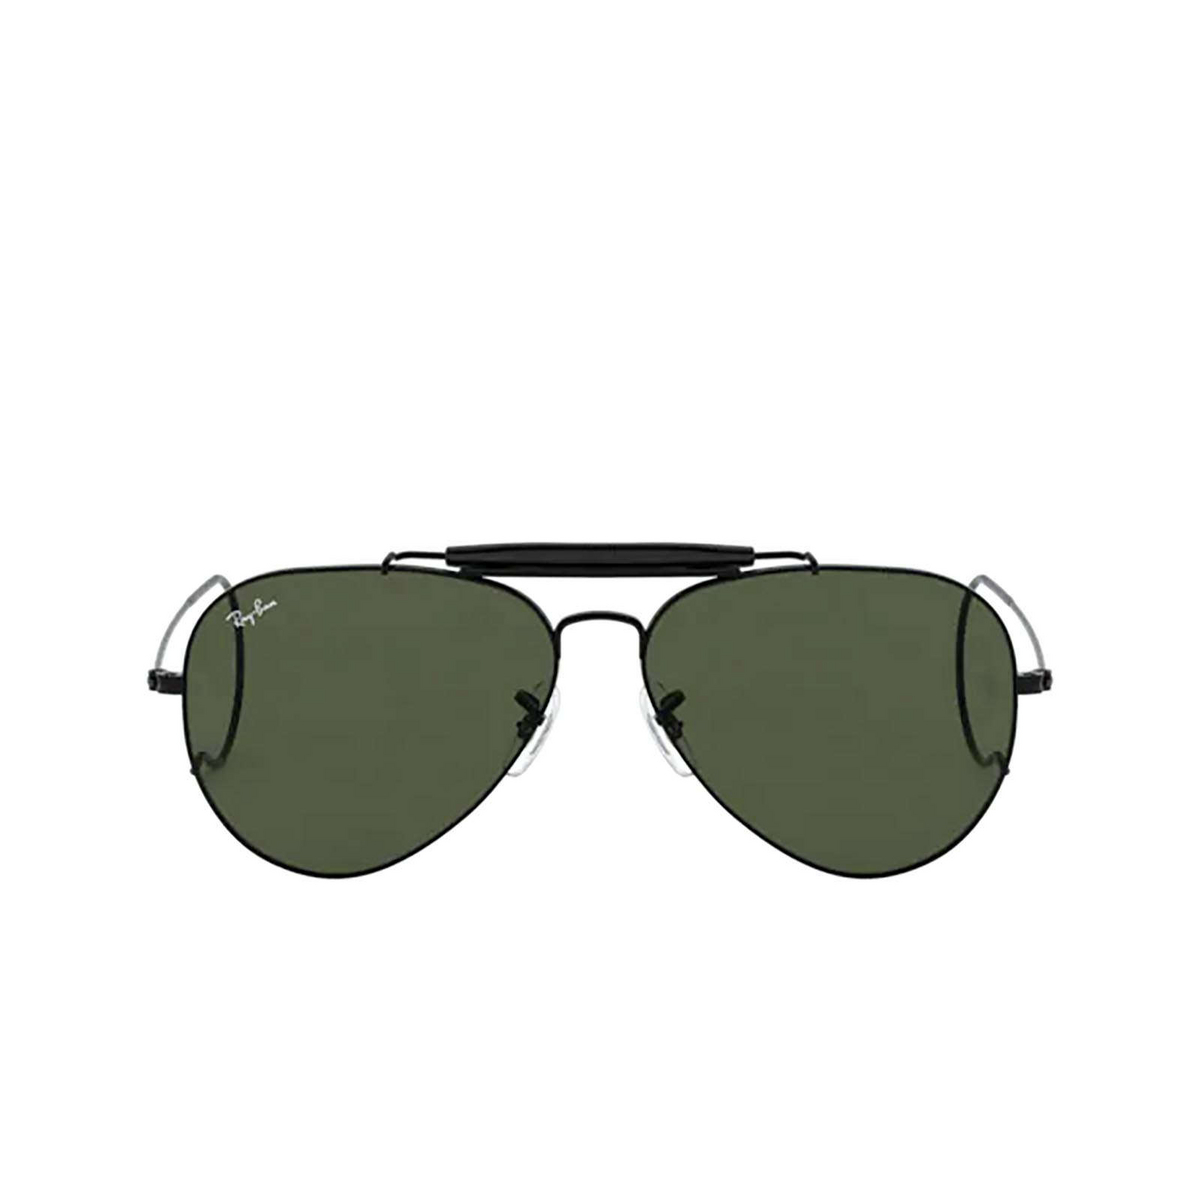 Ray-Ban® Aviator Sunglasses: Outdoorsman I RB3030 color Black L9500 - 1/3.